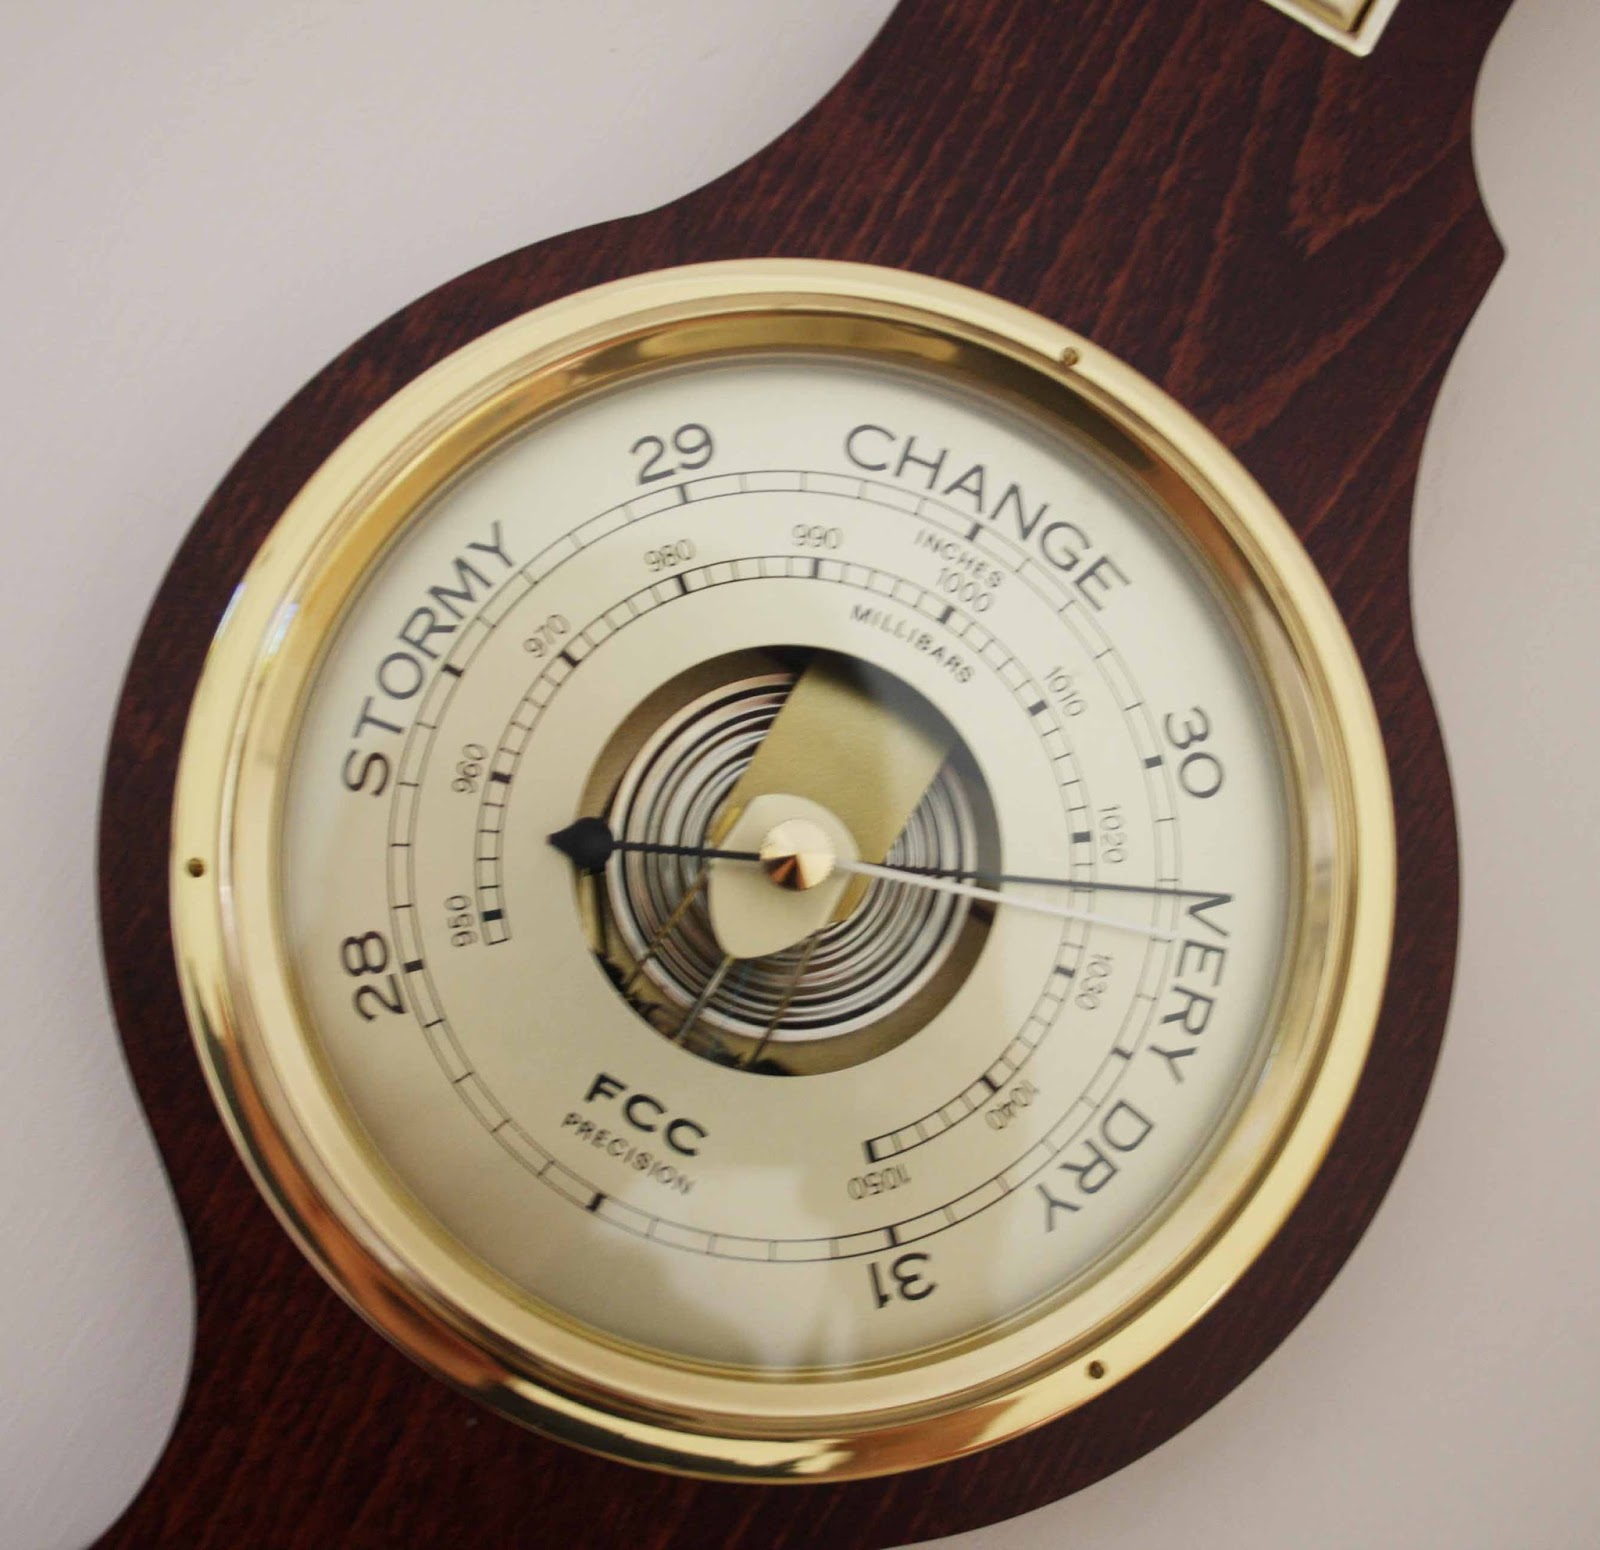 Duncan Charmans World of Angling: Barometer. - IMG 0315